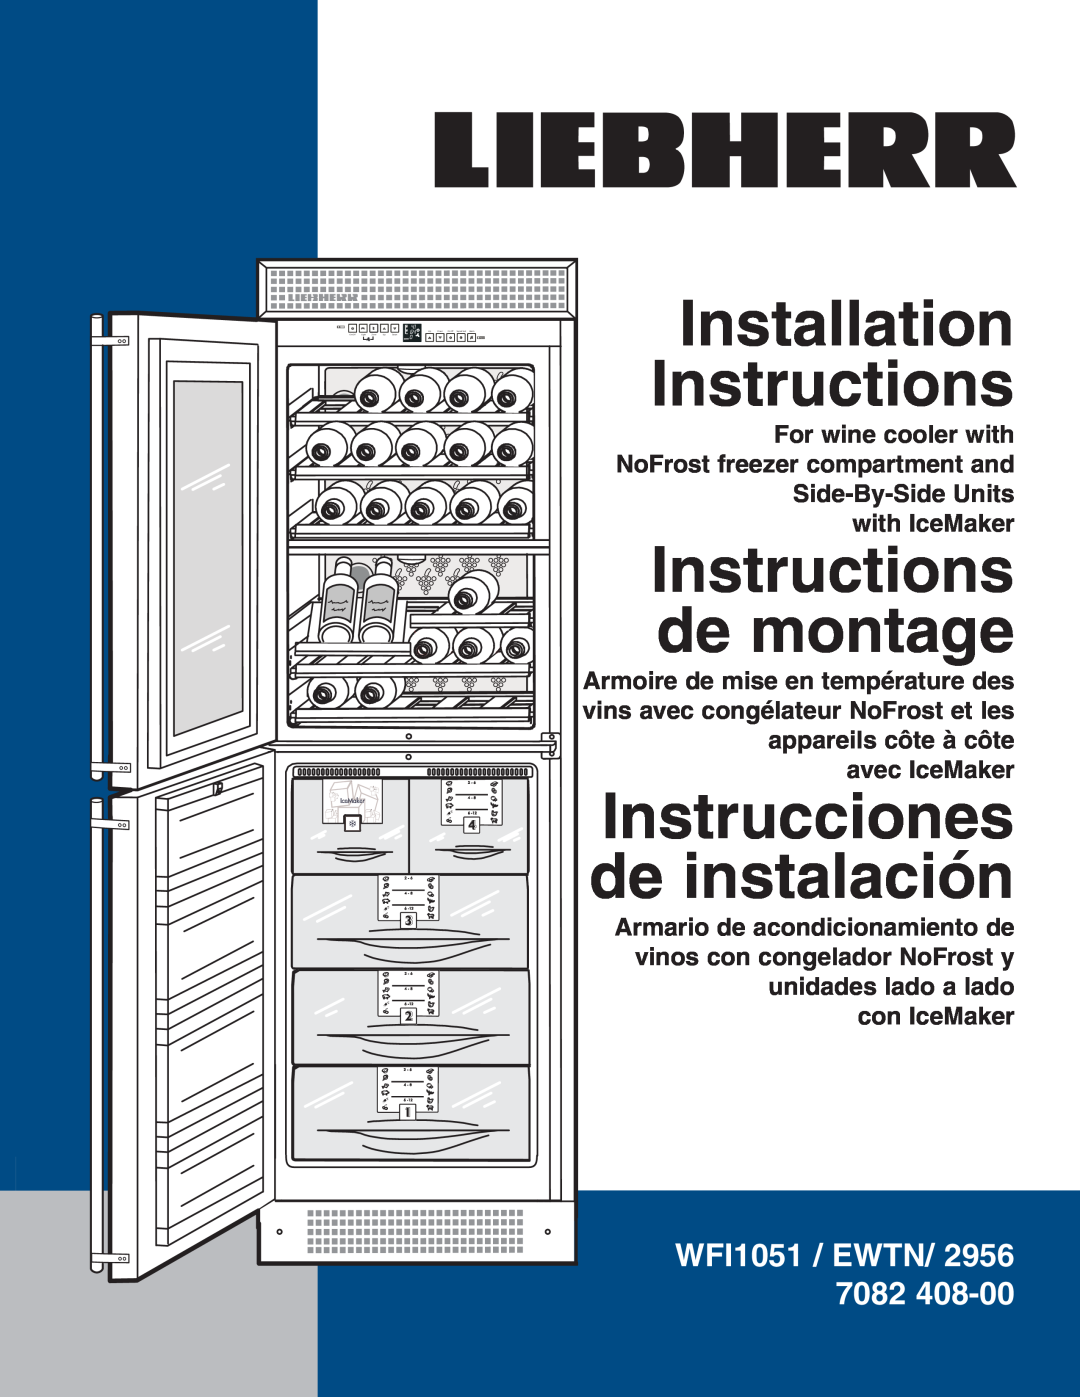 Liebherr EWTN installation instructions Installation Instructions, Instructions de montage, Instrucciones de instalación 